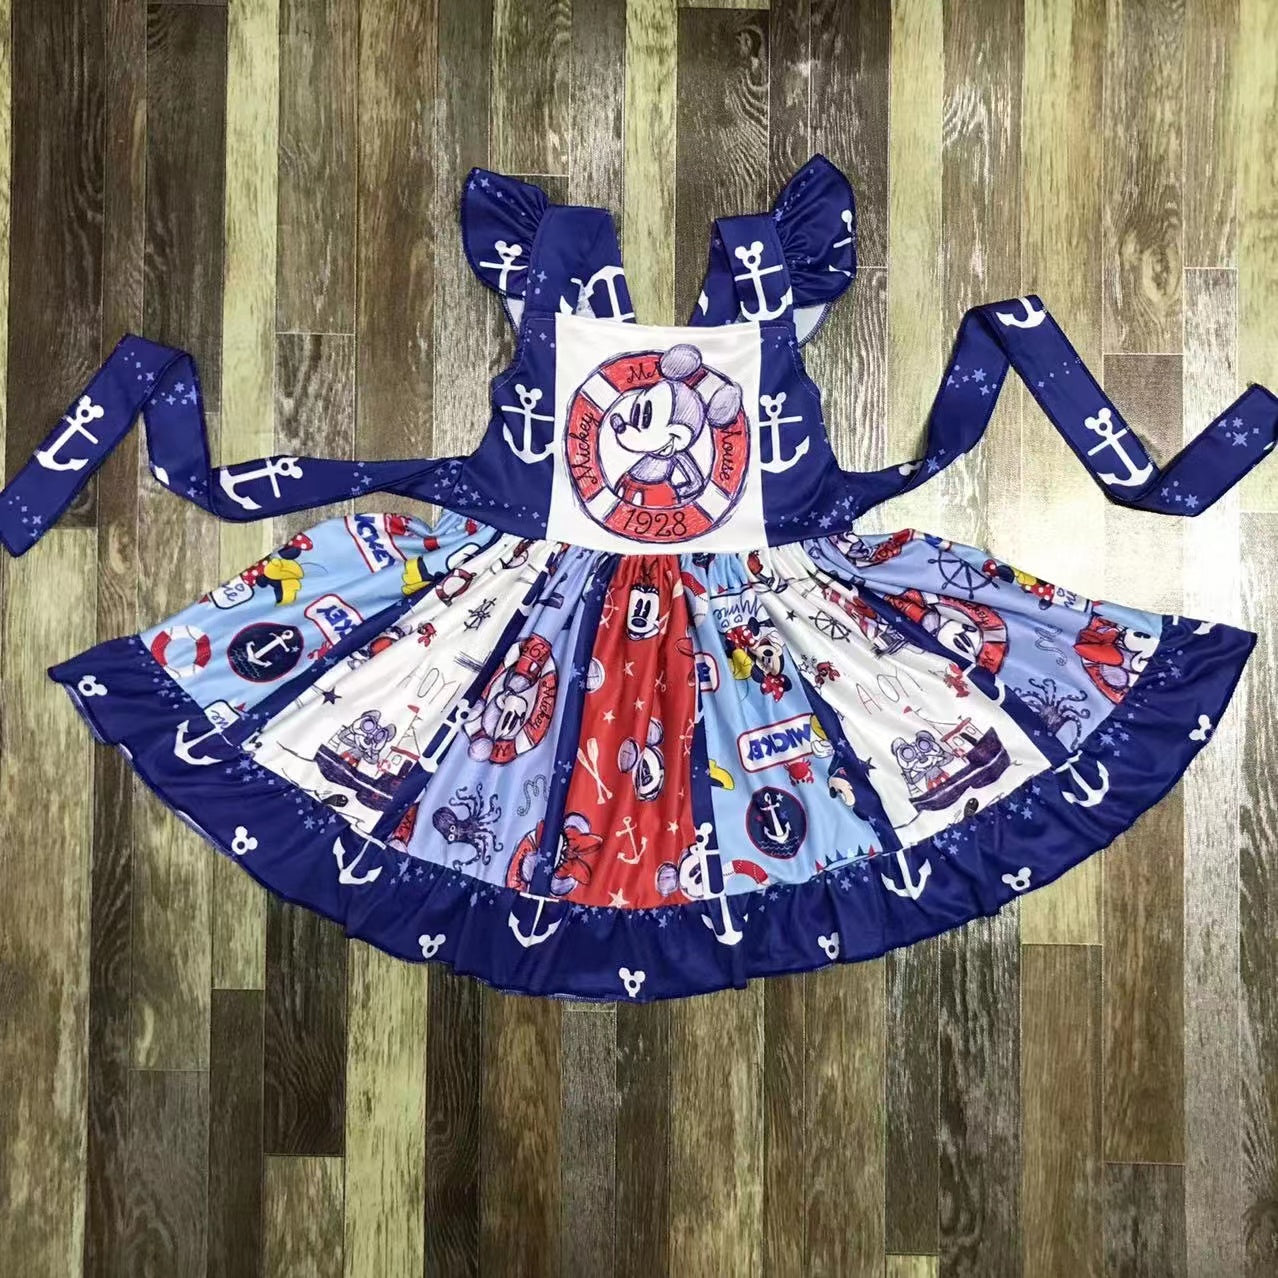 Nautical Mouse Girl's Twirl dress - Preorder - Closing 4/10- ETA mid May